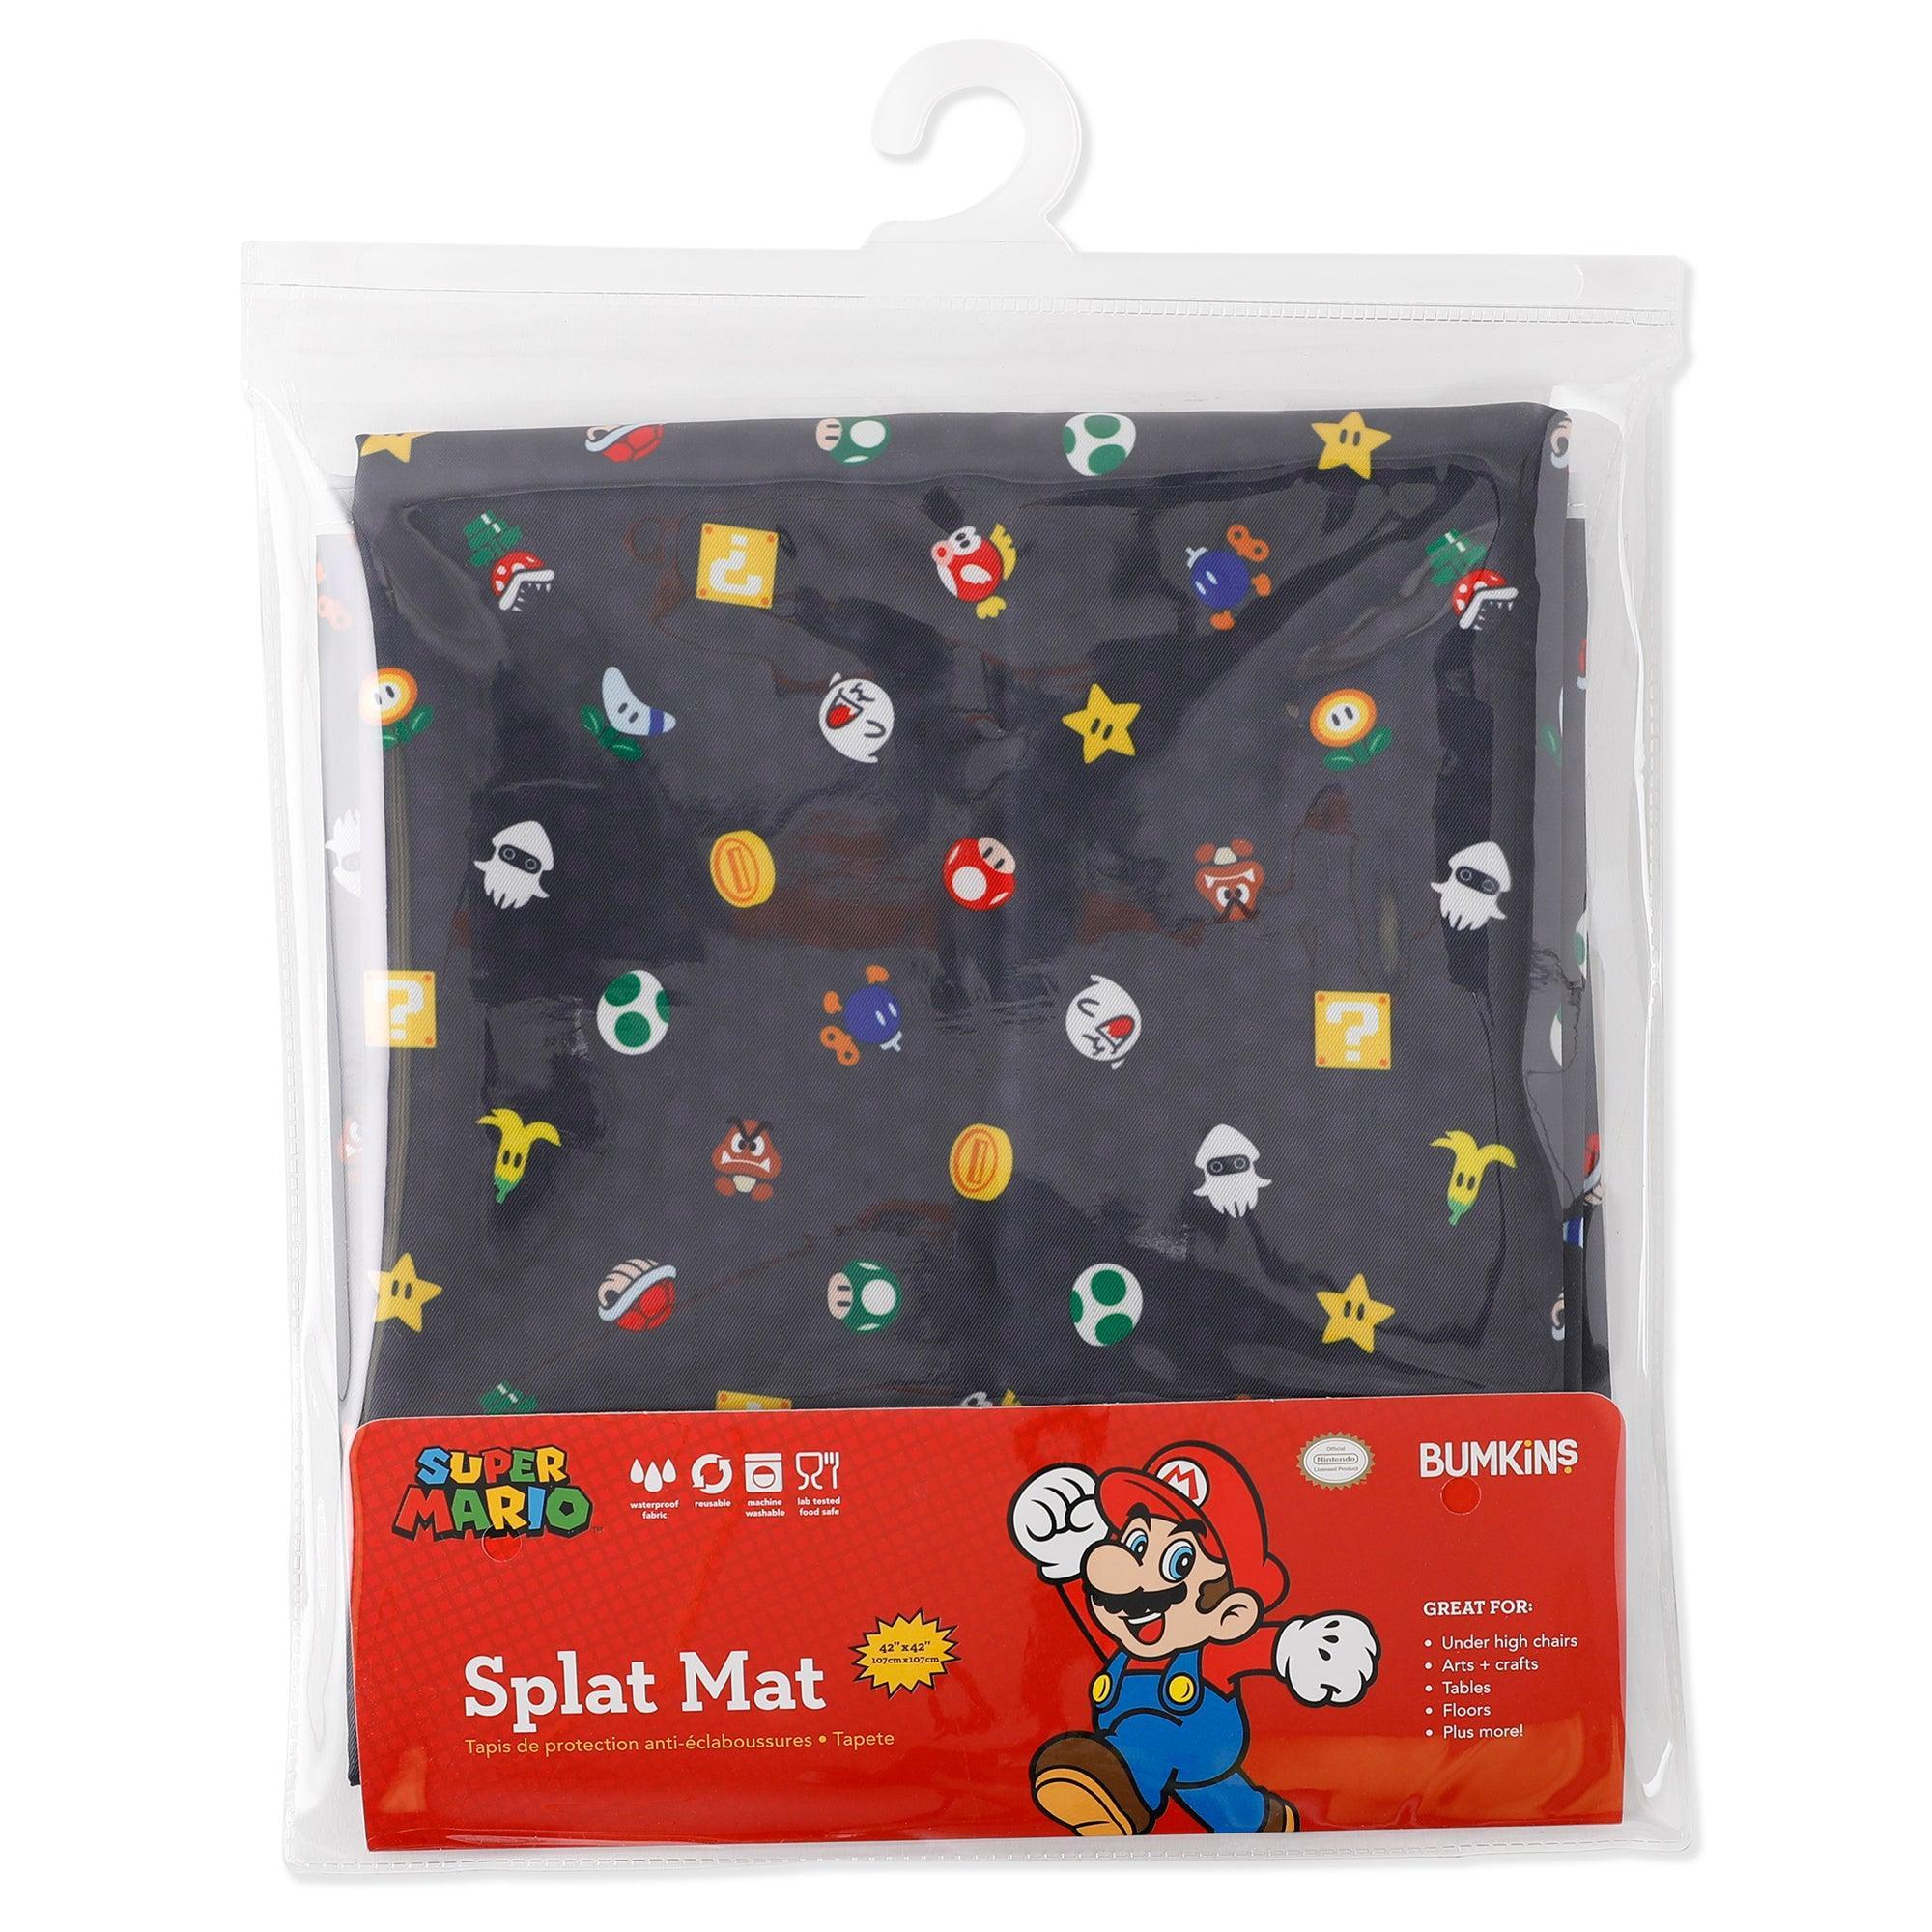 Splat Mat: Super Mario™ Lineup - Bumkins